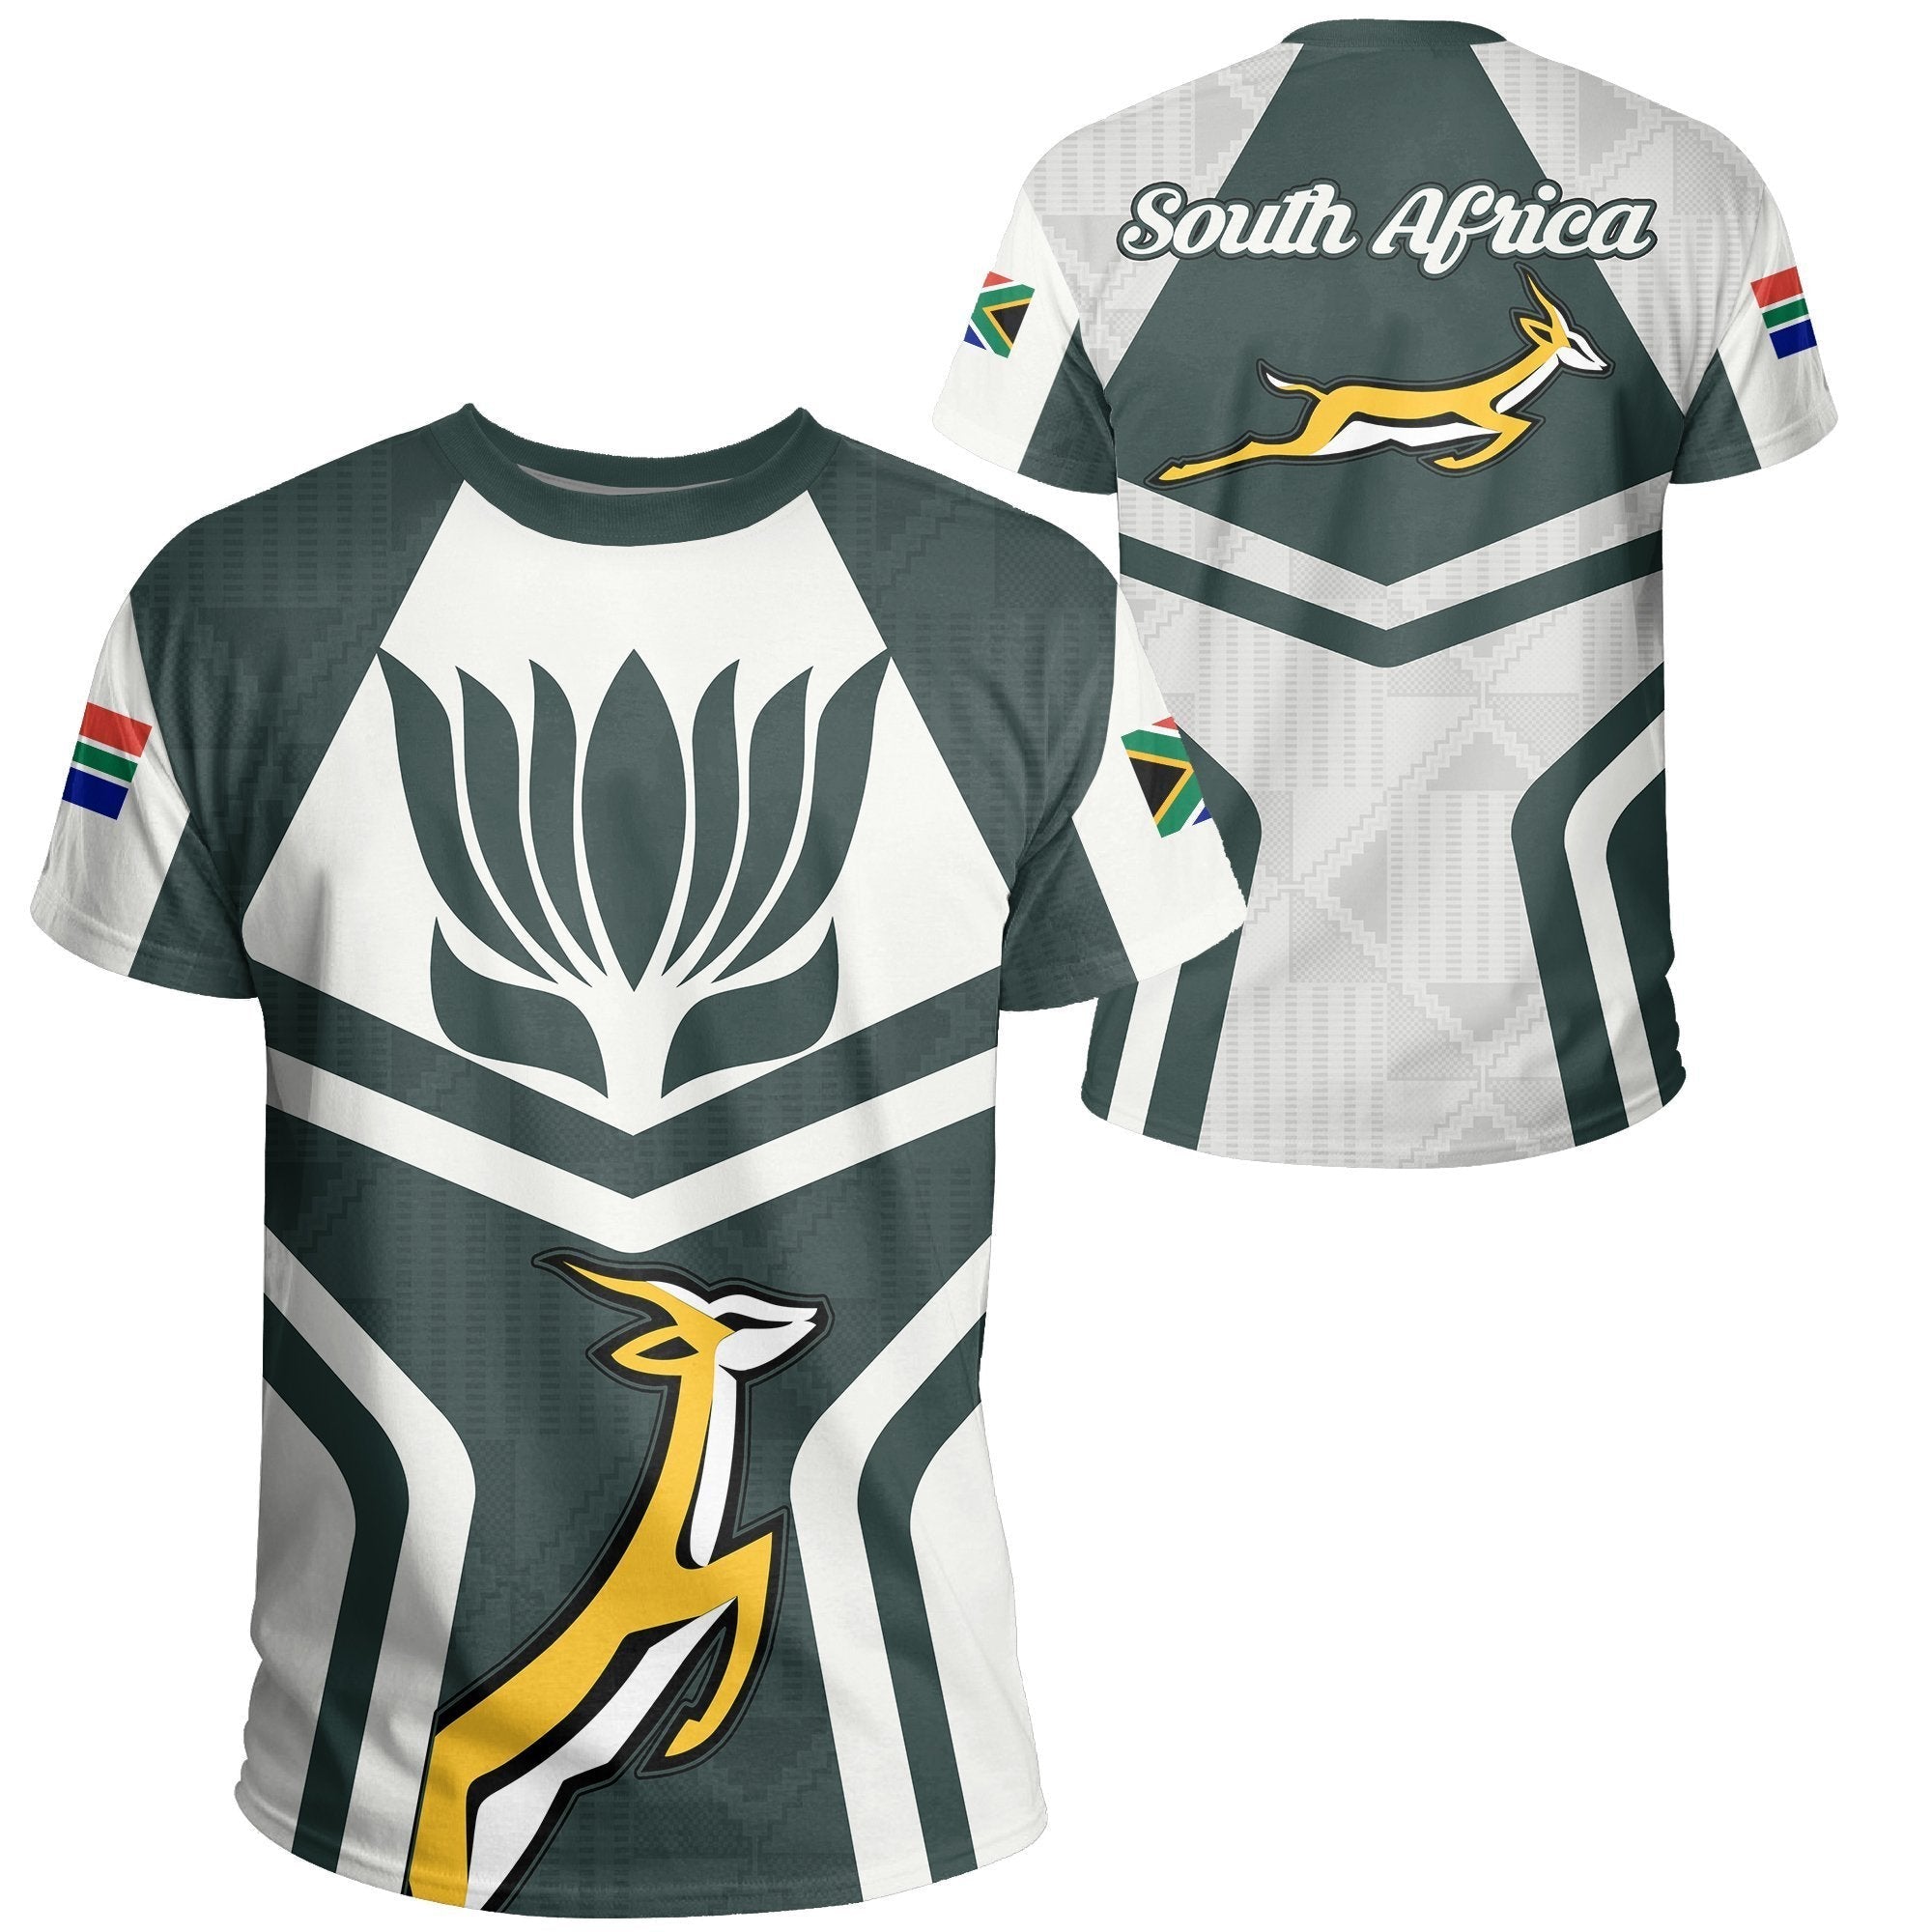 wonder-print-shop-t-shirt-south-africa-springbok-protea-ryan-style